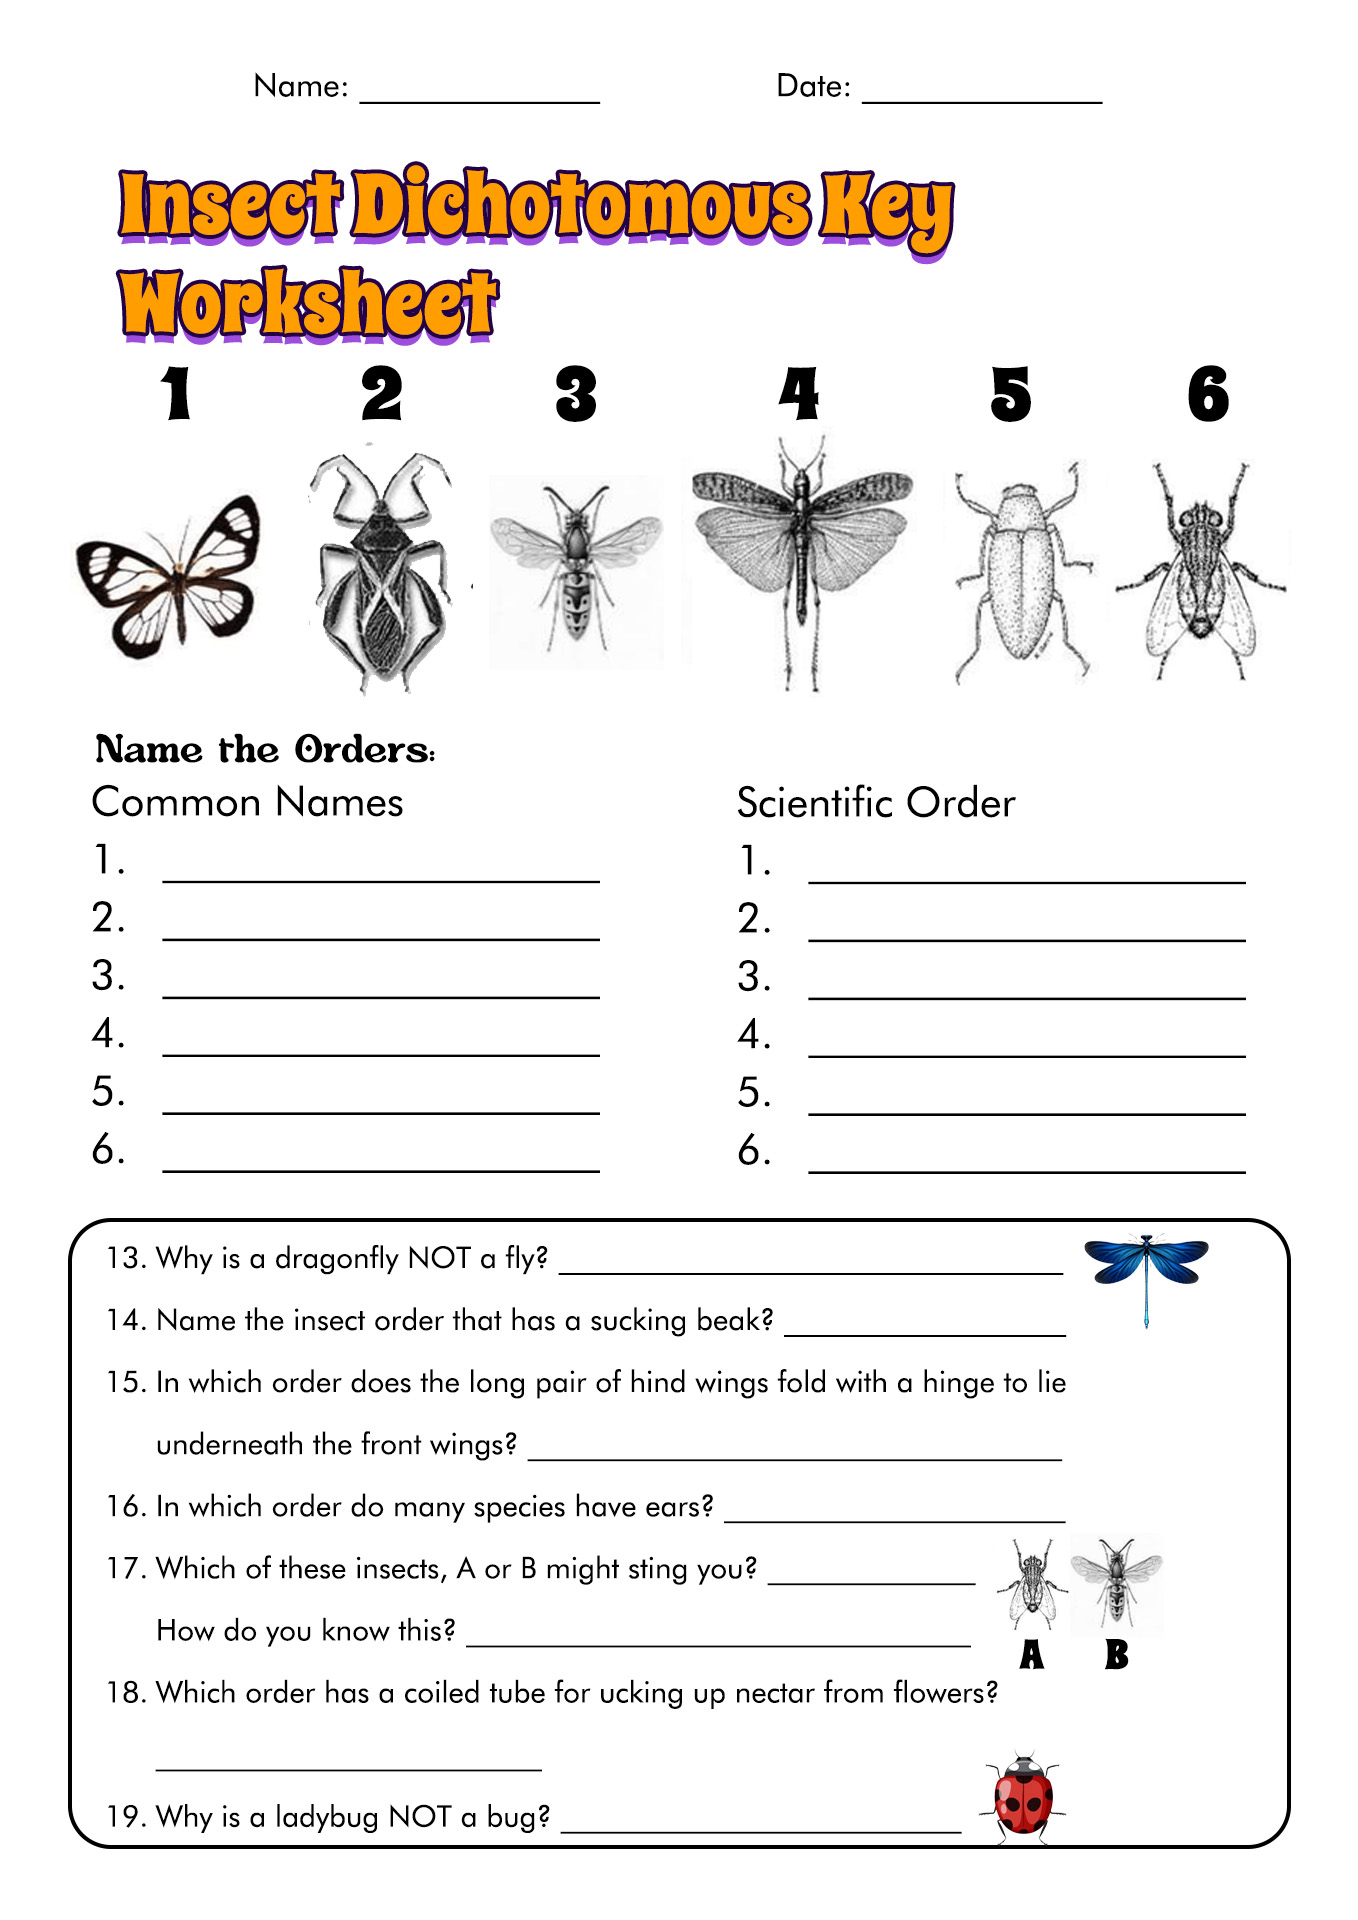 Insect Dichotomous Key Worksheet Image